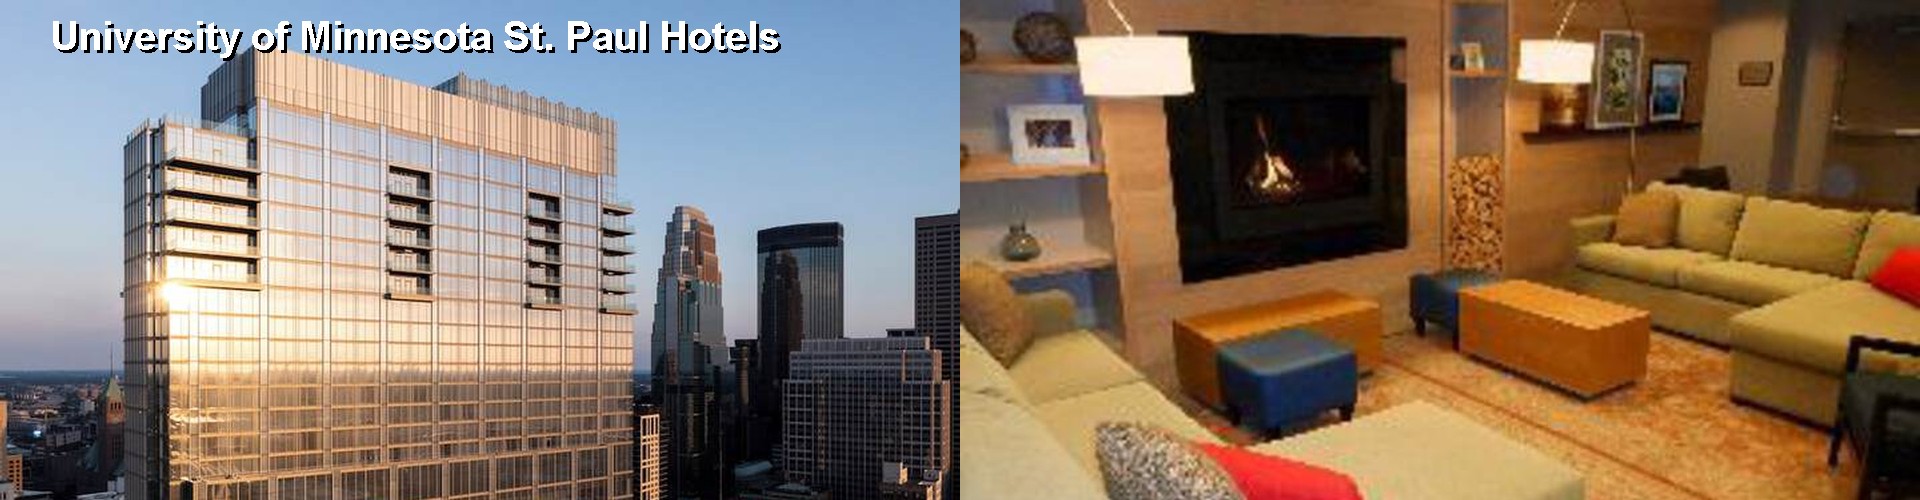 5 Best Hotels near University of Minnesota St. Paul